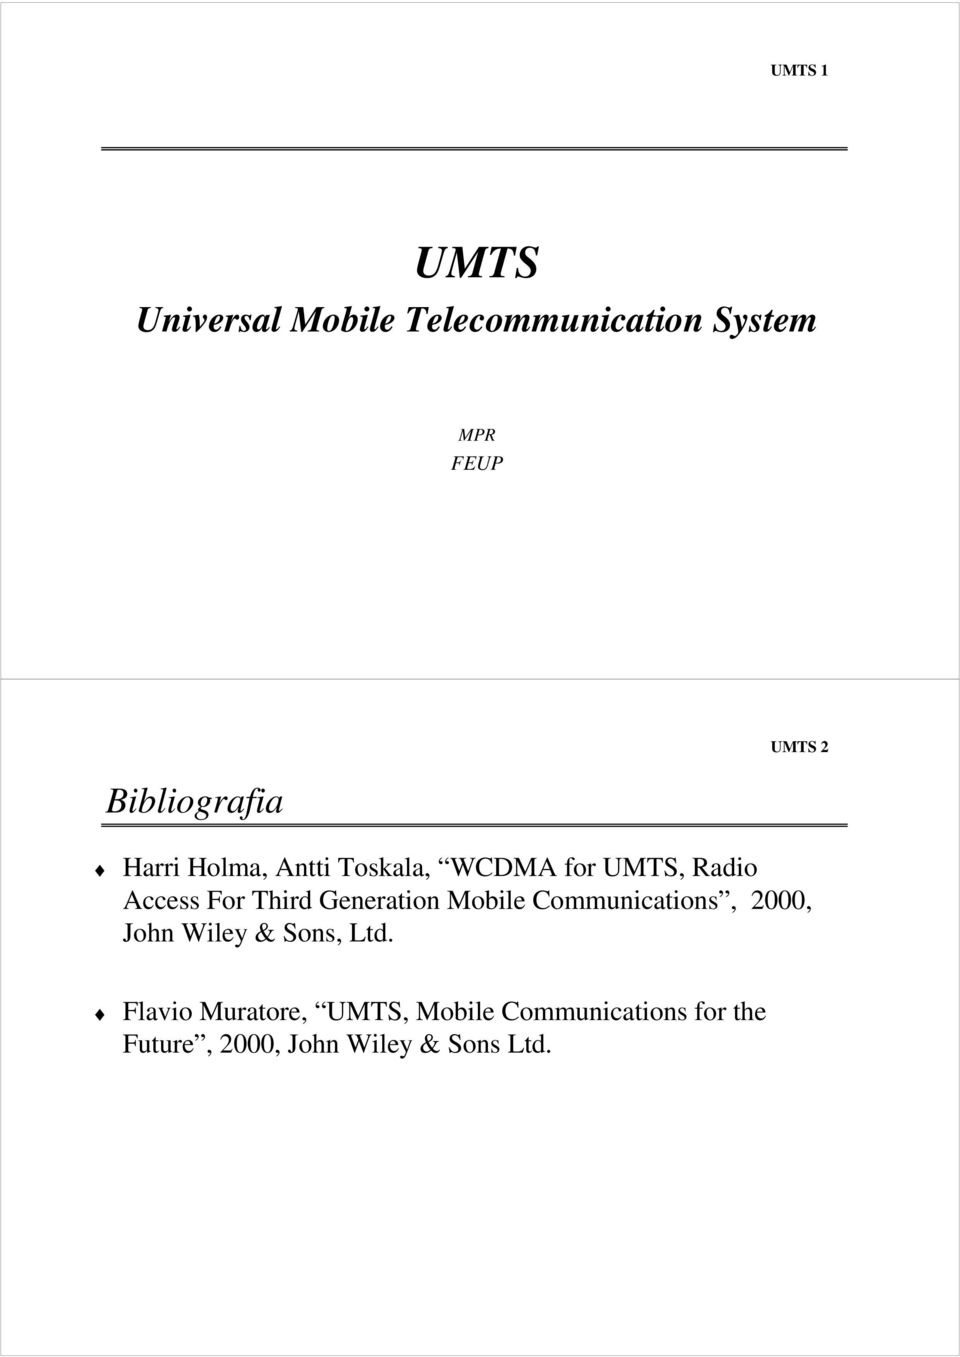 Generation Mobile Communications, 2000, John Wiley & Sons, Ltd.